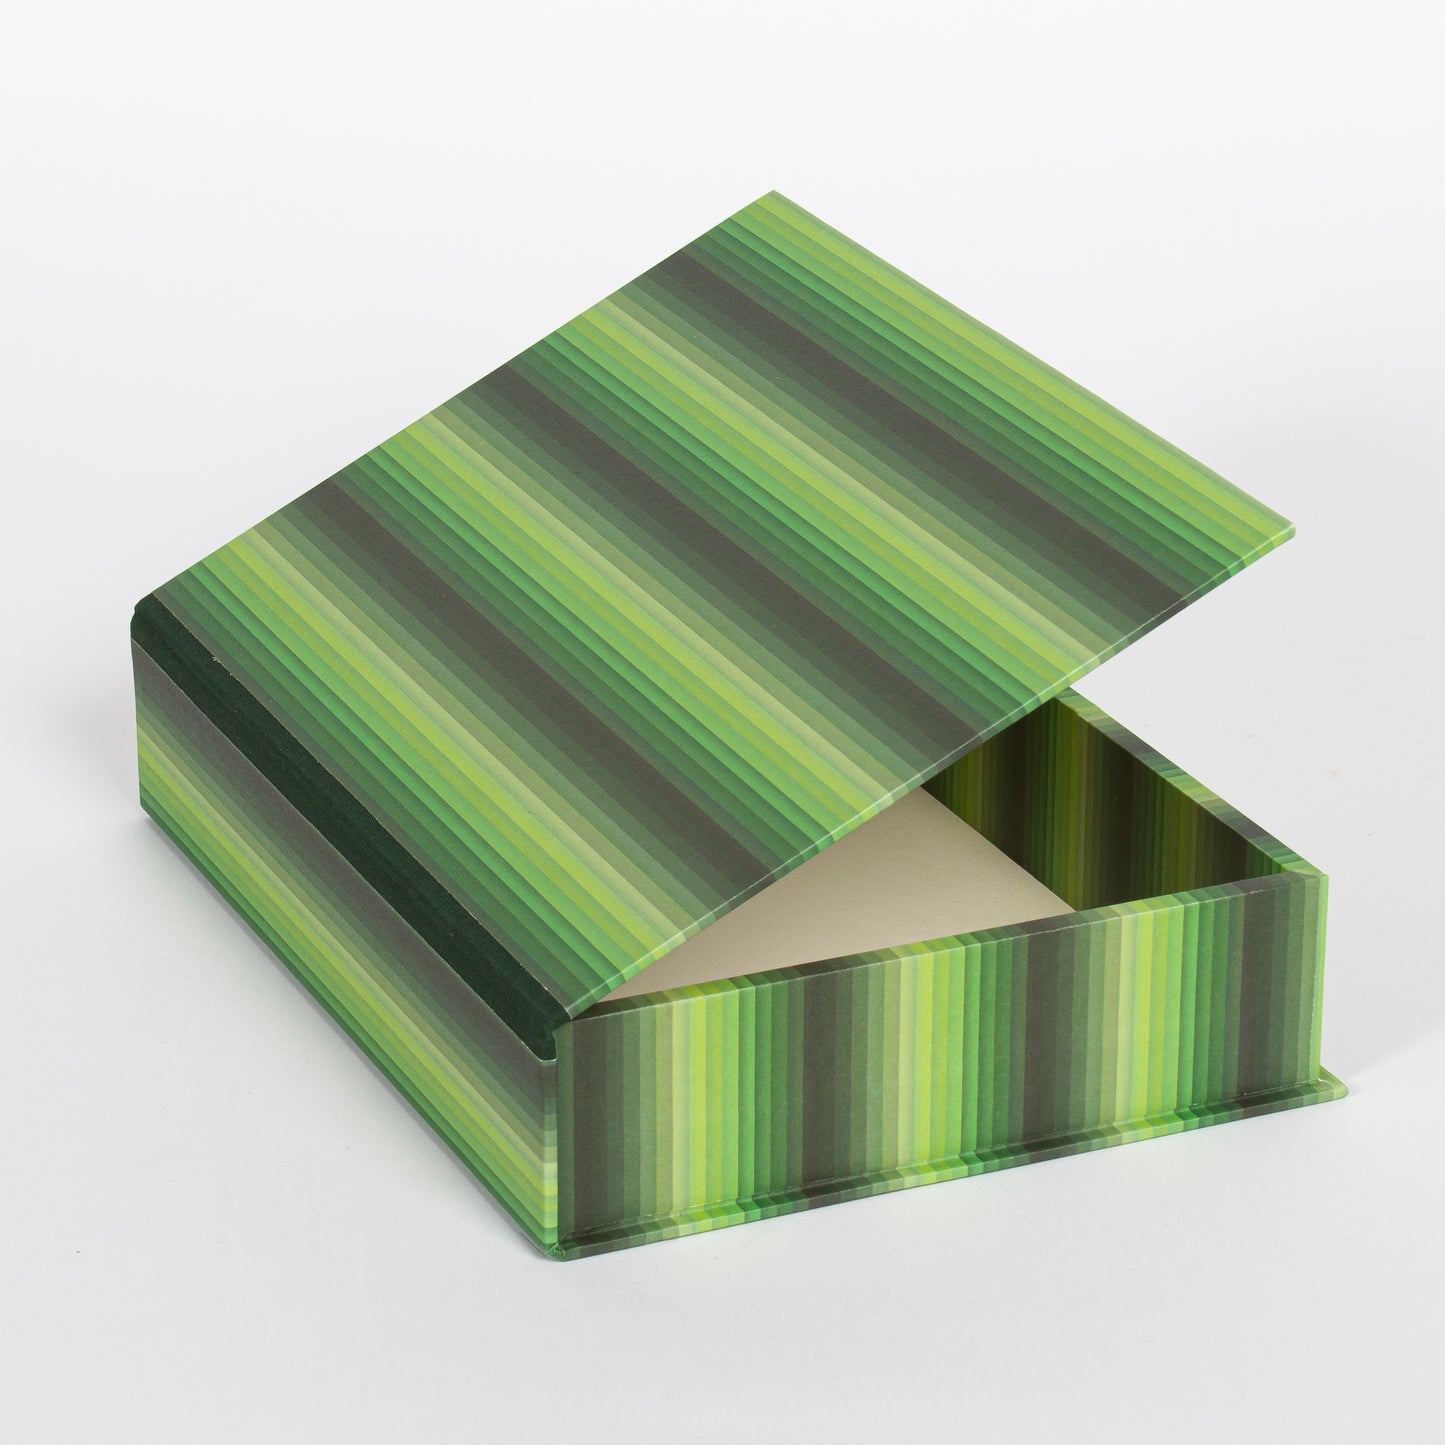 A4 Boxfile - Green Undulating Stripes